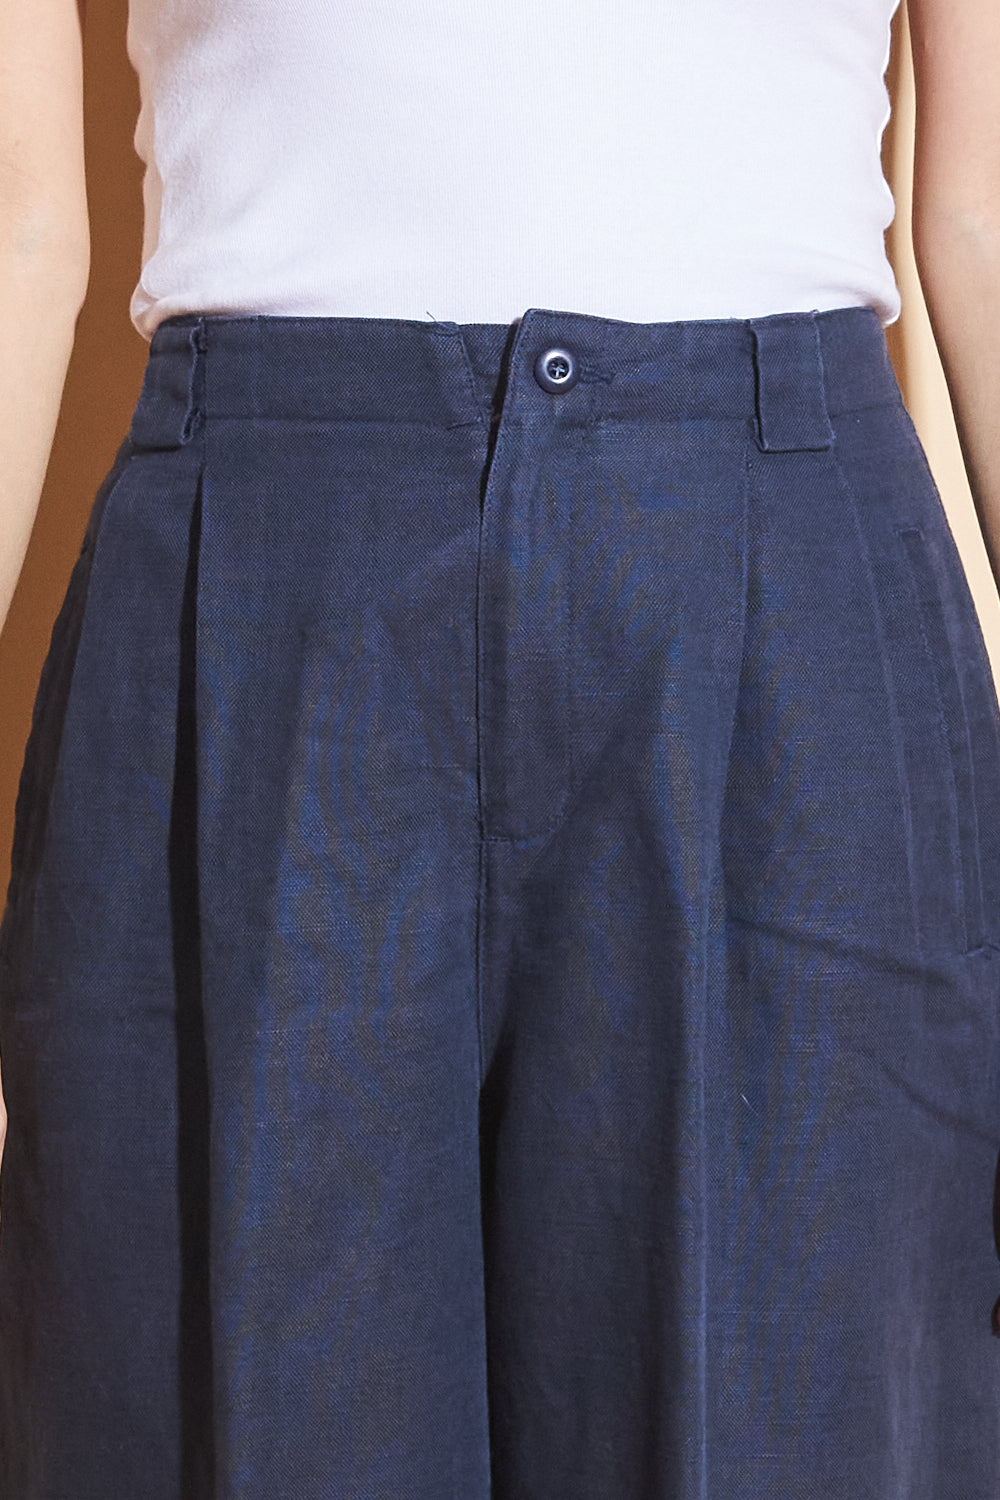 Vintage Navy Linen Blend Trousers, Sz 27/28"